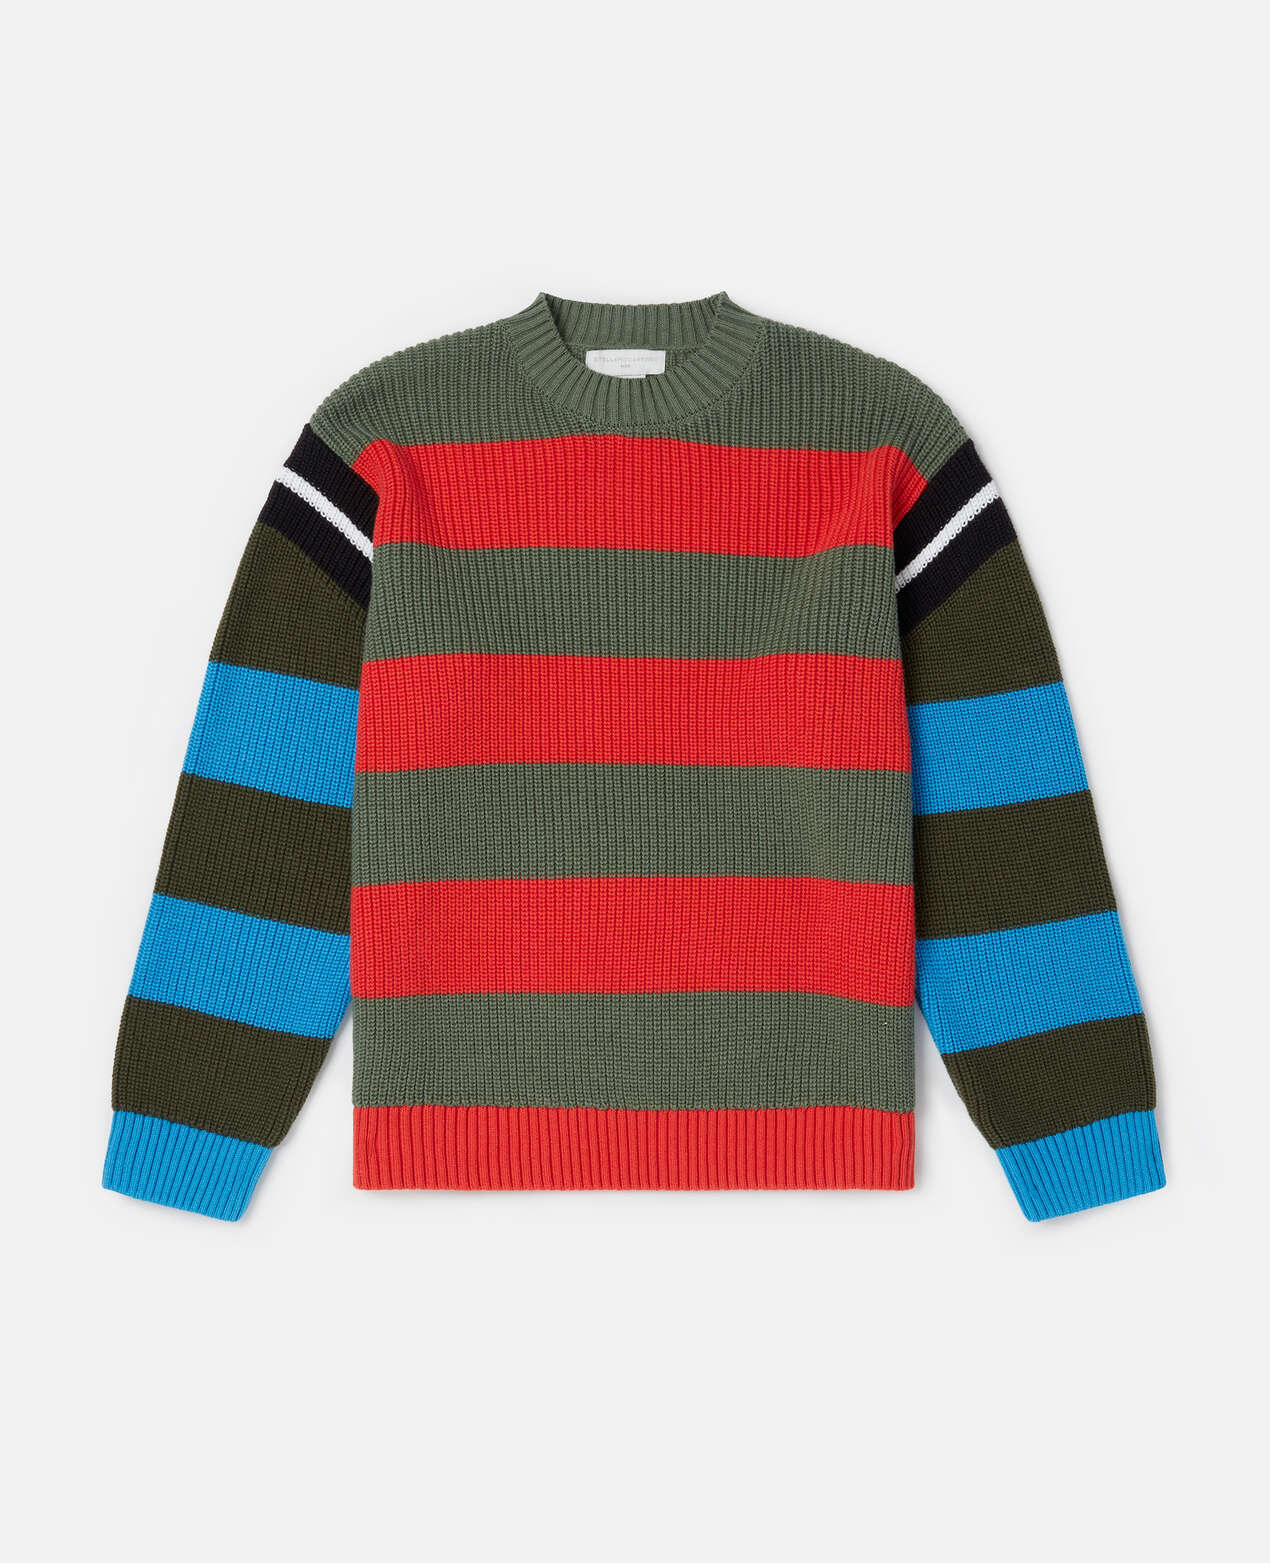 Stella McCartney boys stripe sweater